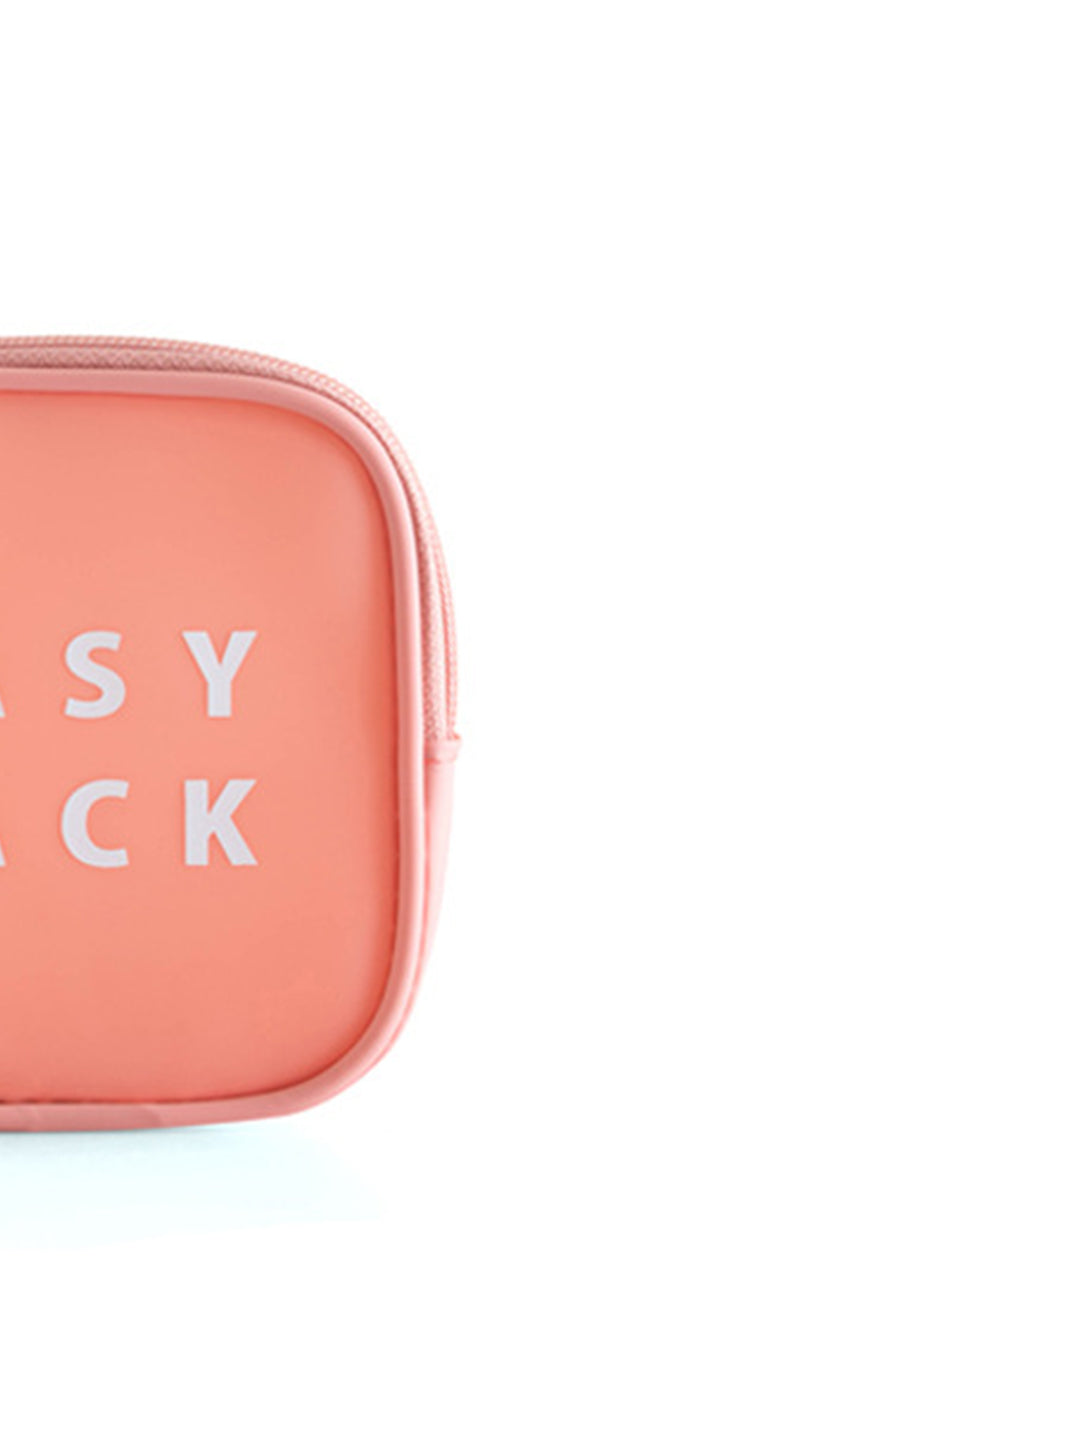 VON CASA Square Plastic Travel Pouch - Easy Pack - Peach